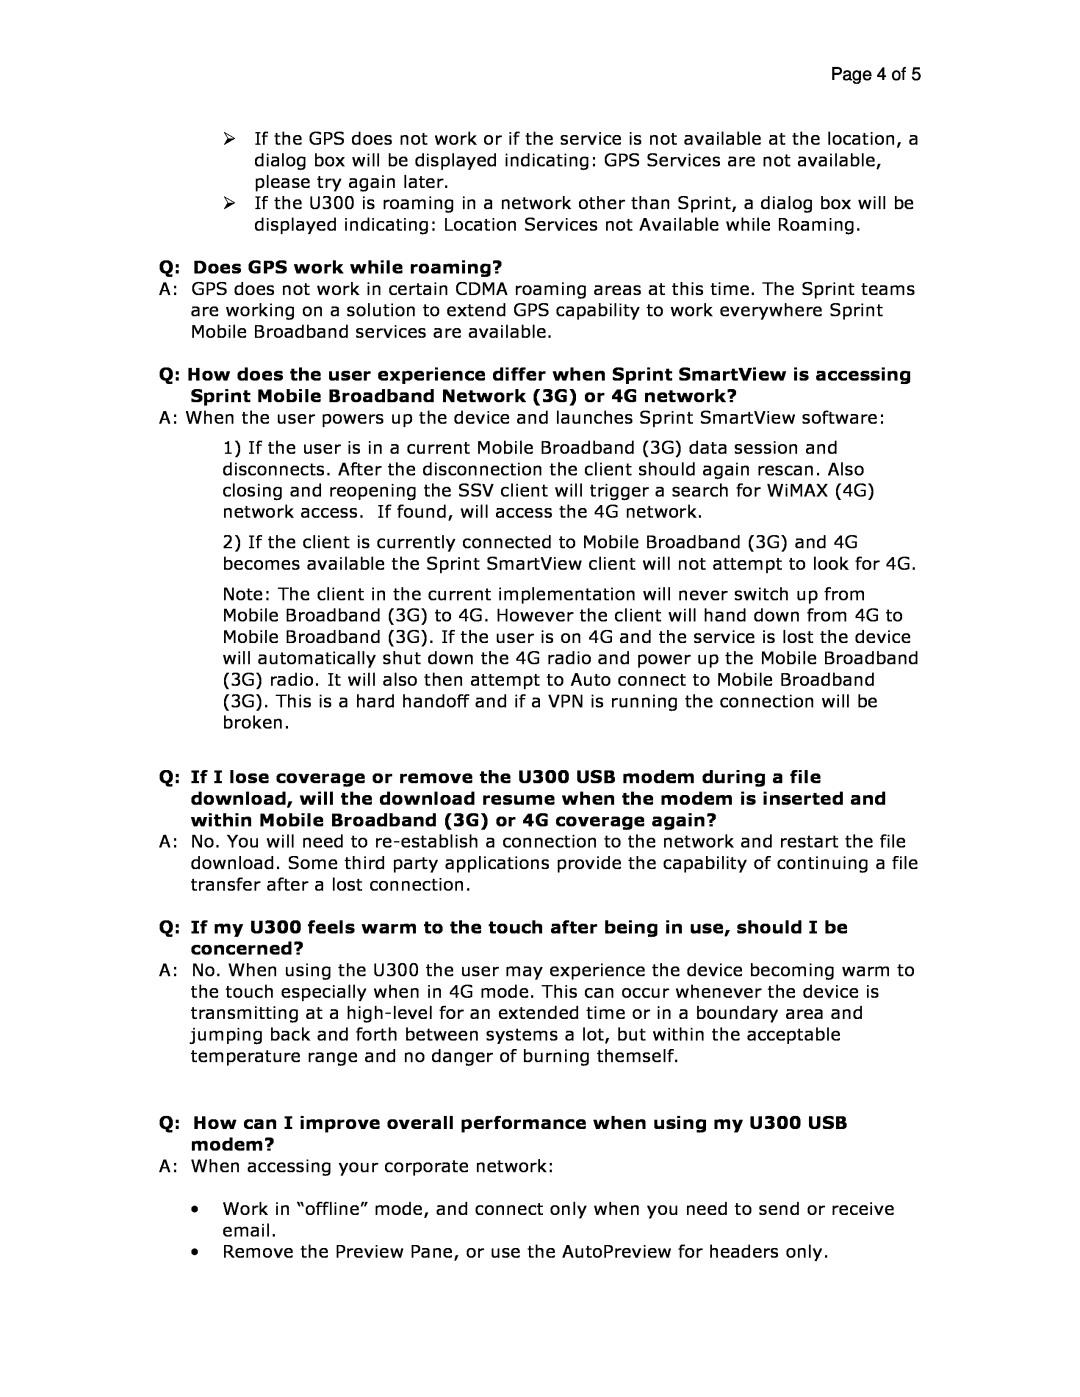 Sprint Nextel U300 manual Page 4 of 